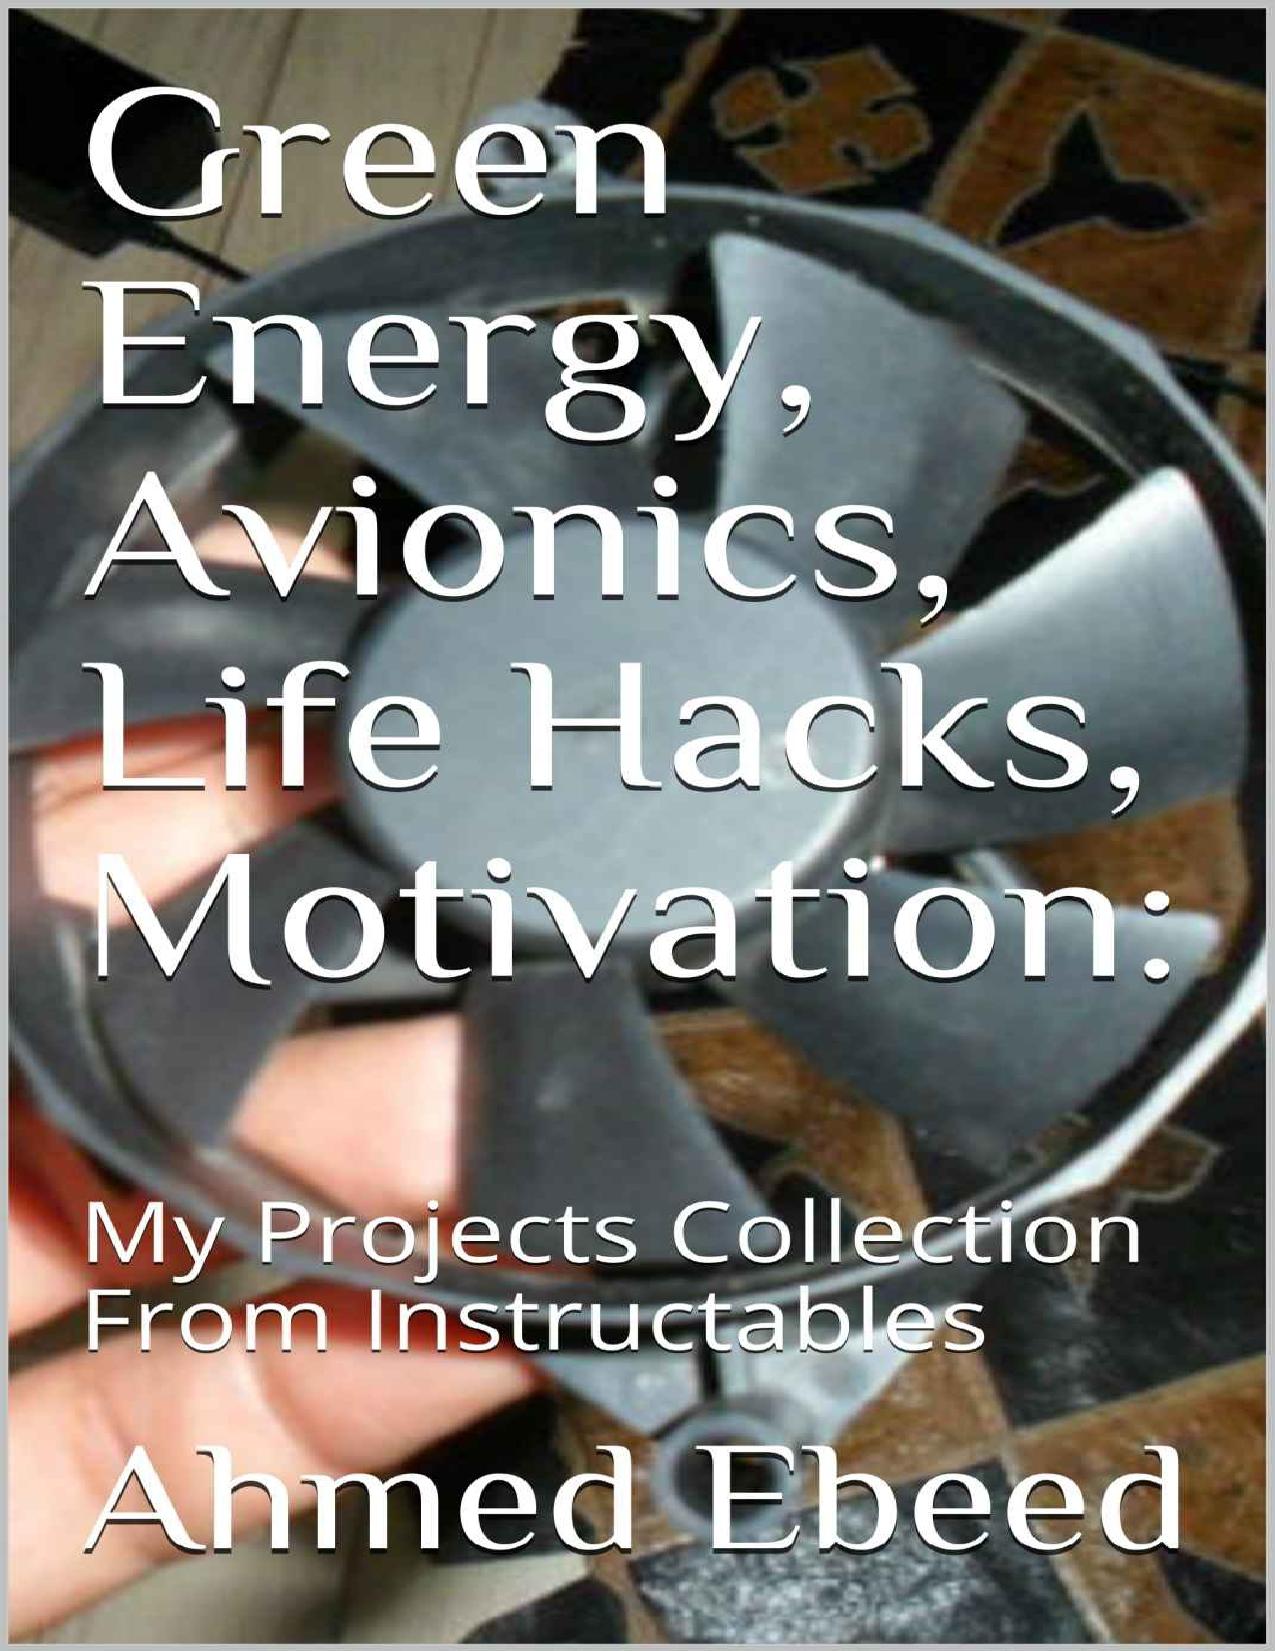 Green Energy, Avionics, Life Hacks, Motivation: by Ebeed Ahmed